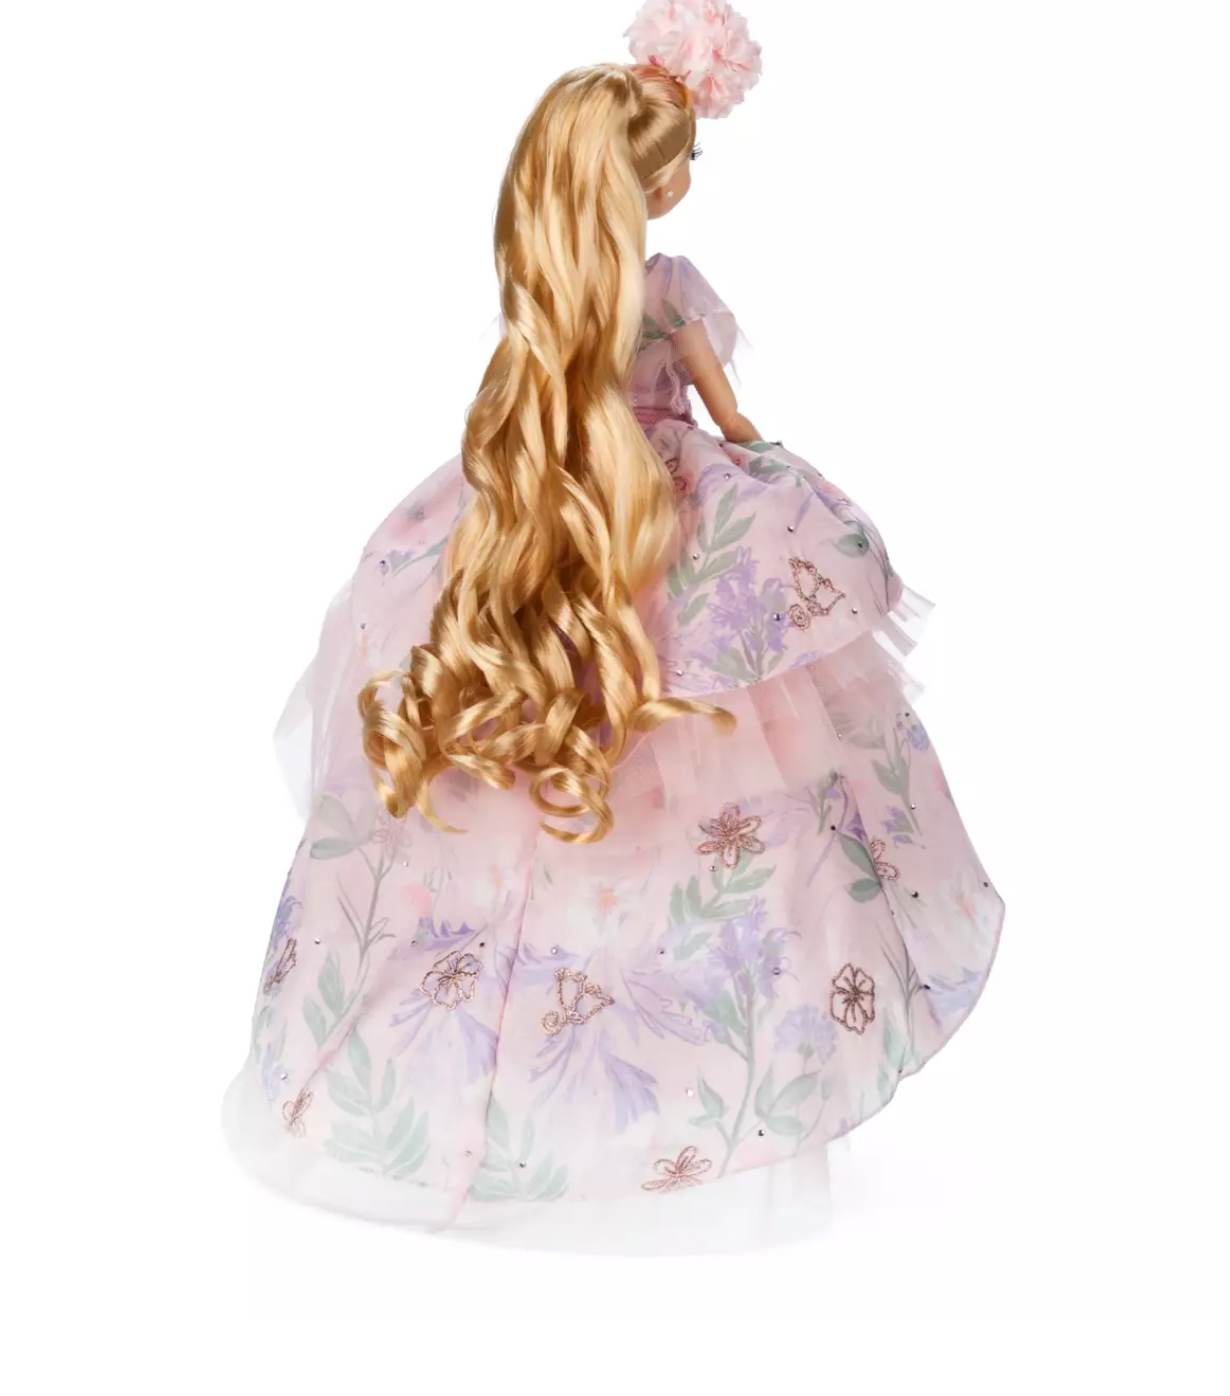 Disney Ultimate Princess Celebration Designer Rapunzel Limited Doll New with Box